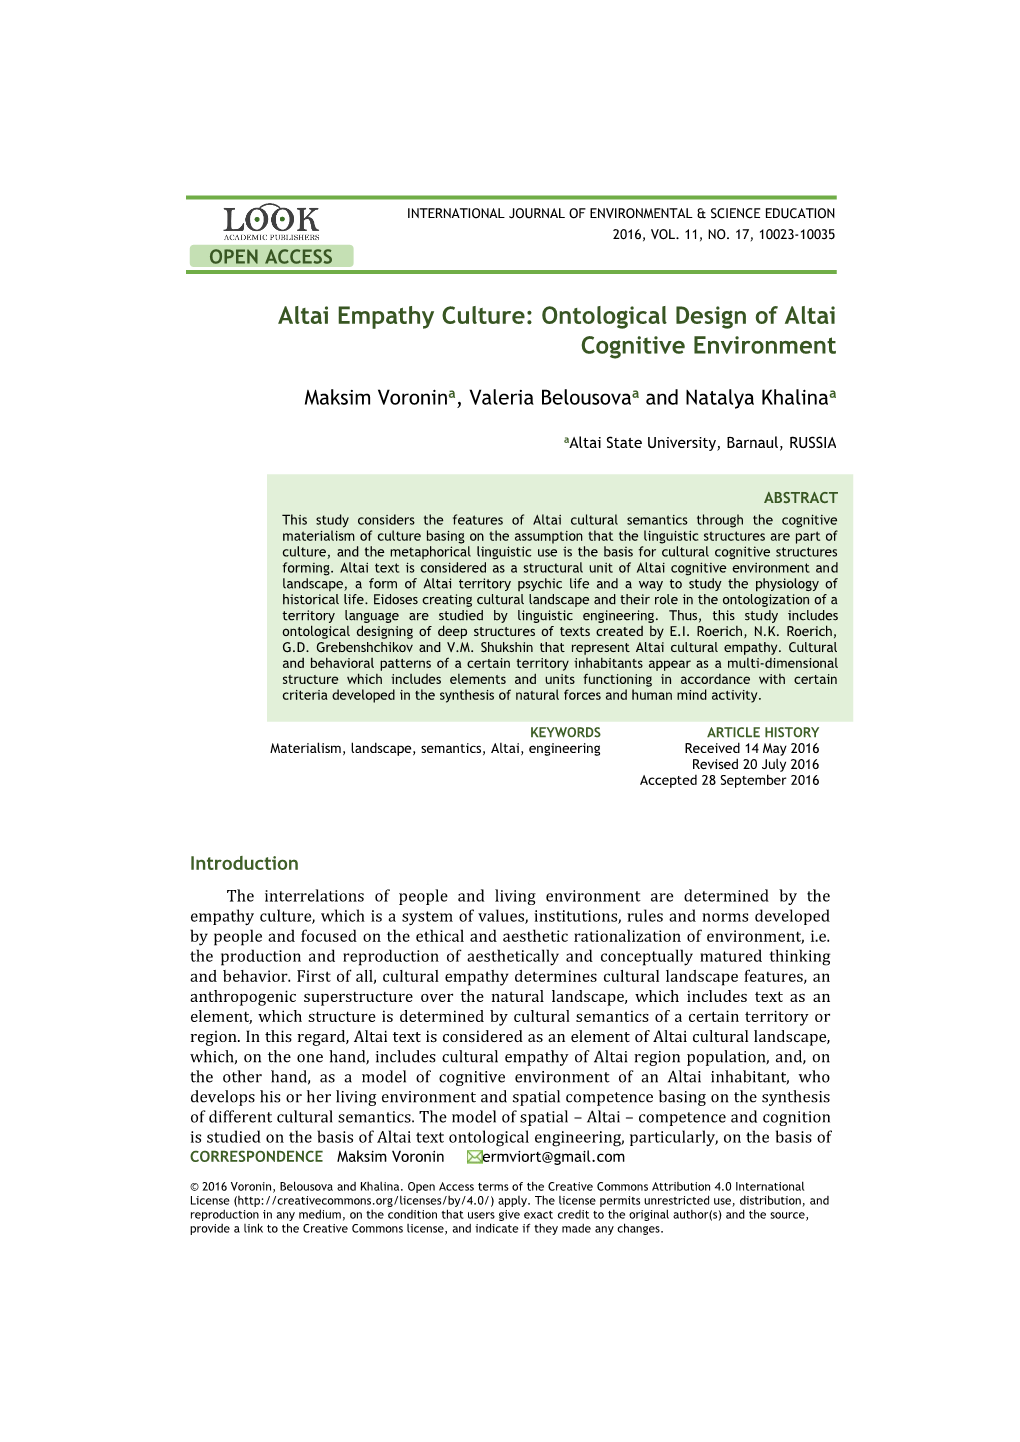 Altai Empathy Culture: Ontological Design of Altai Cognitive Environment